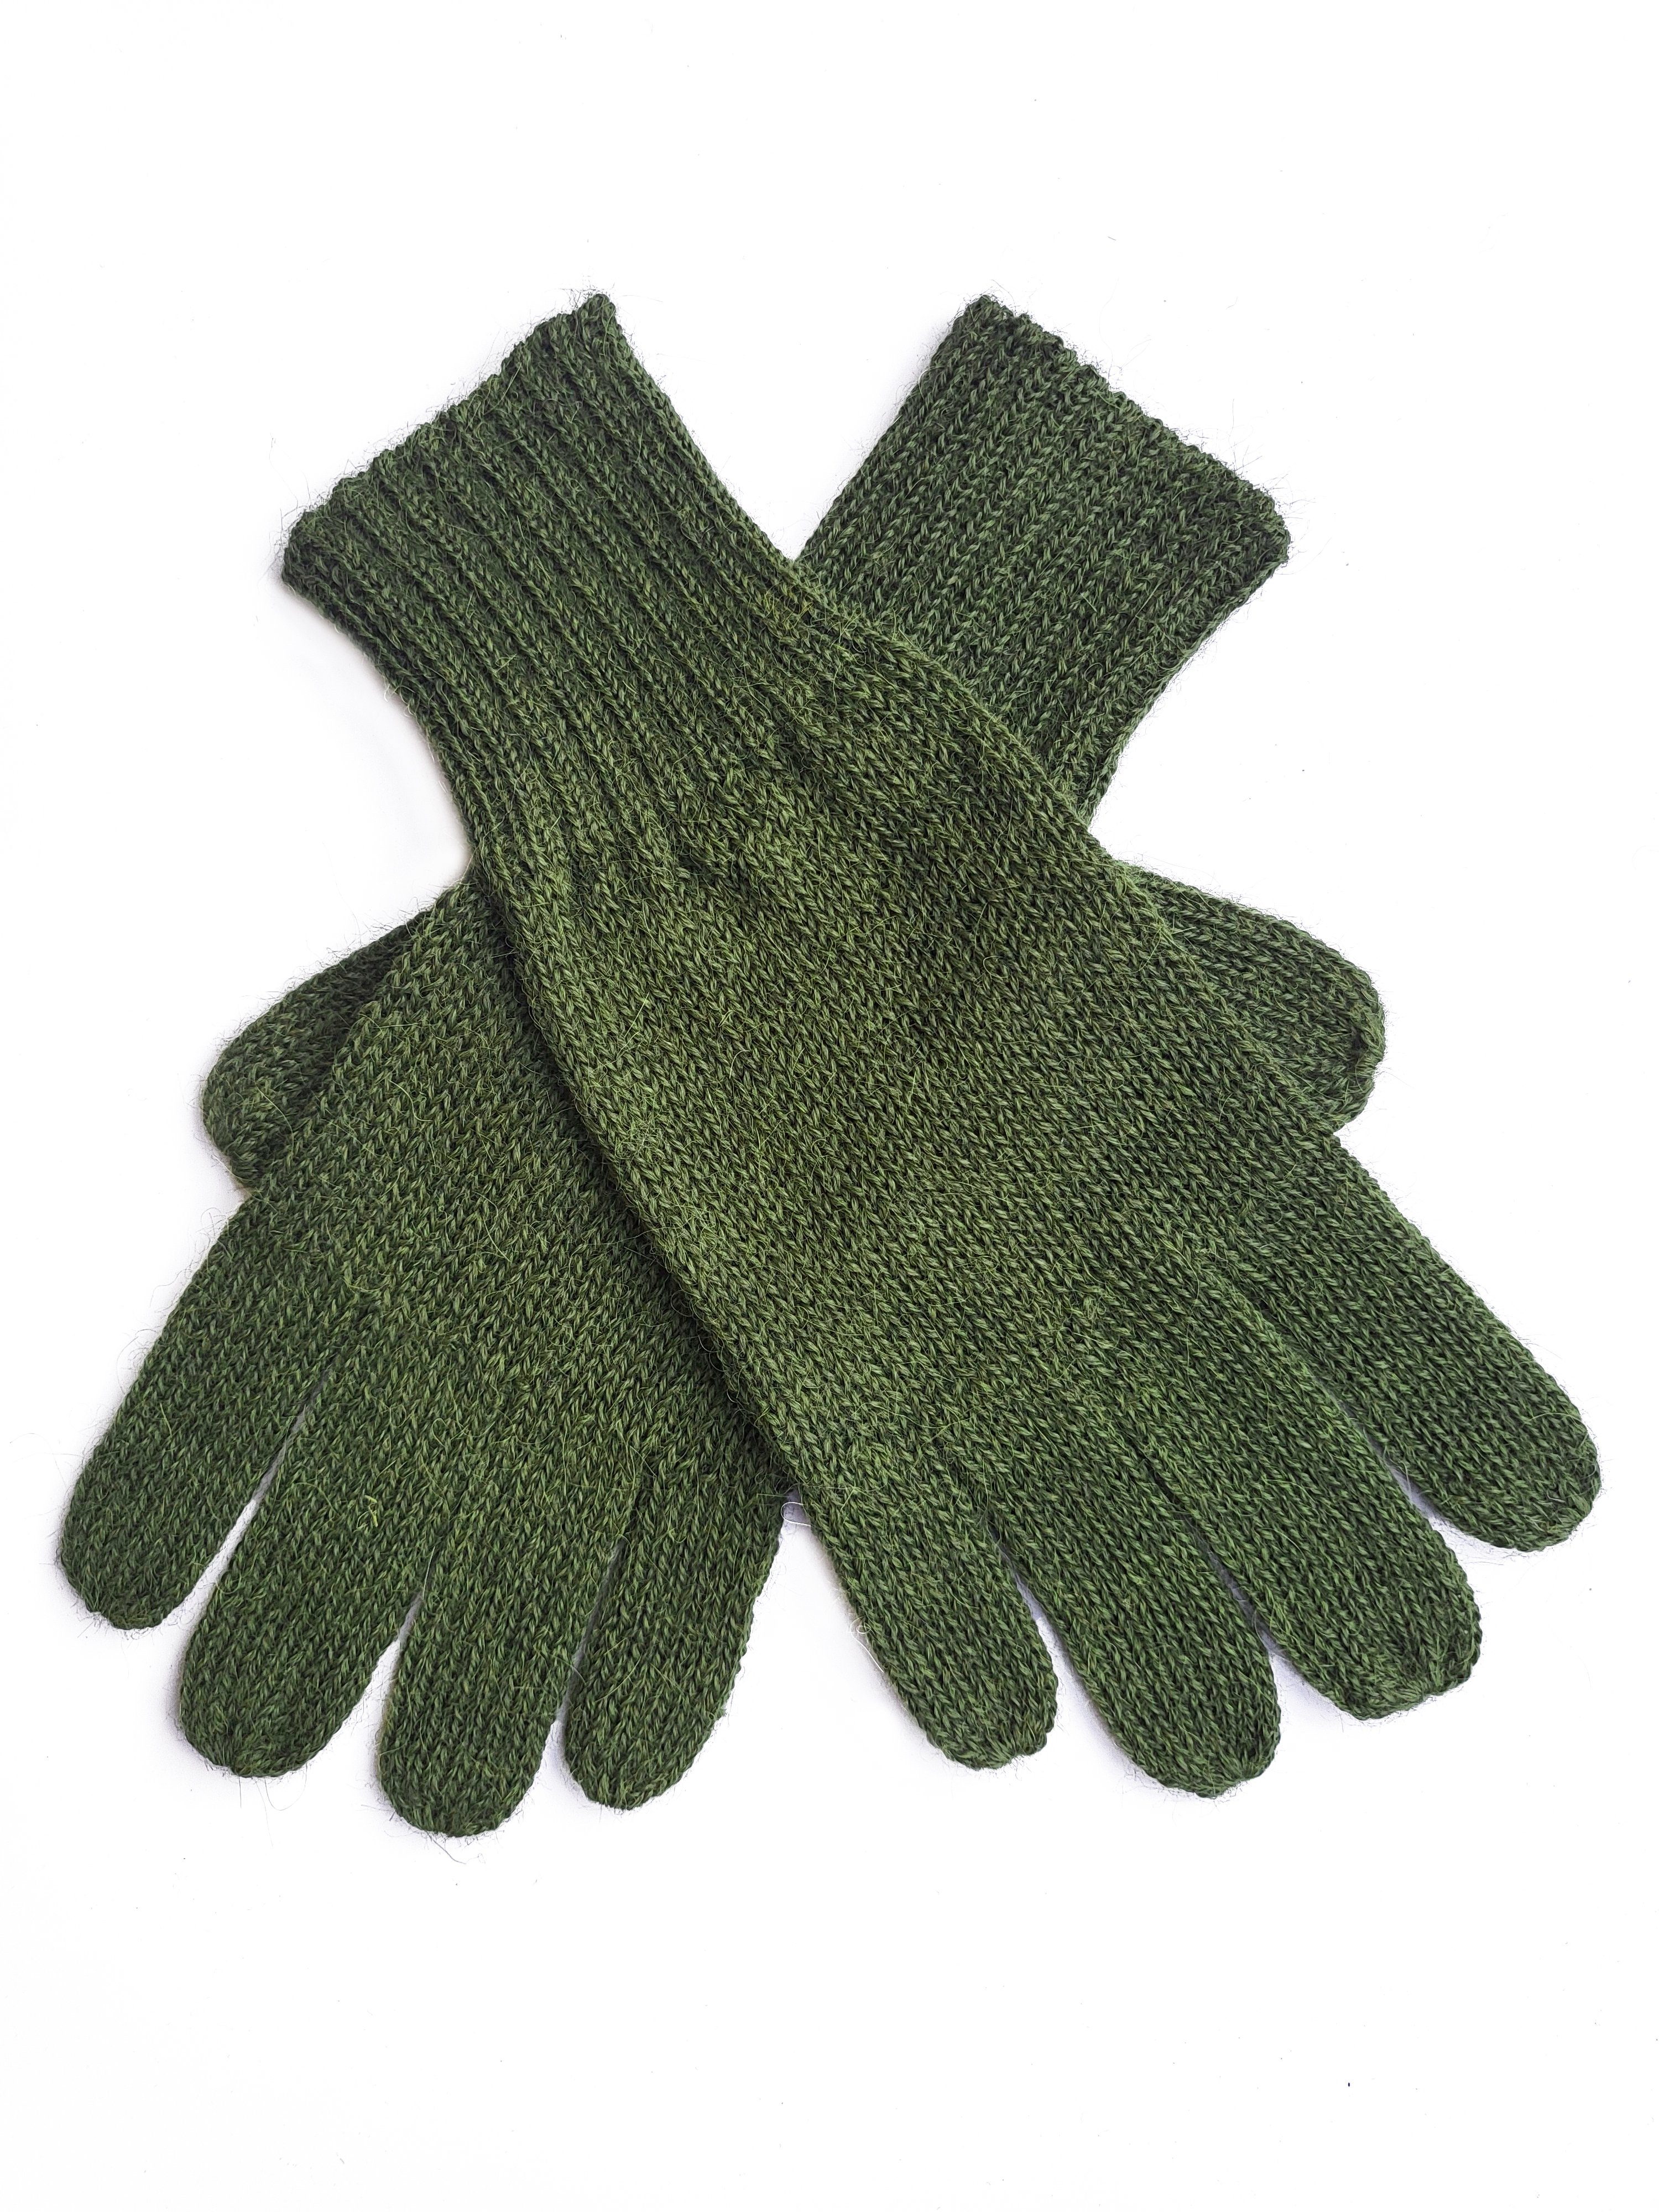 Posh Gear Strickhandschuhe Guantino Alpaka Fingerhandschuhe aus 100% Alpakawolle oliv grün | Wollhandschuhe